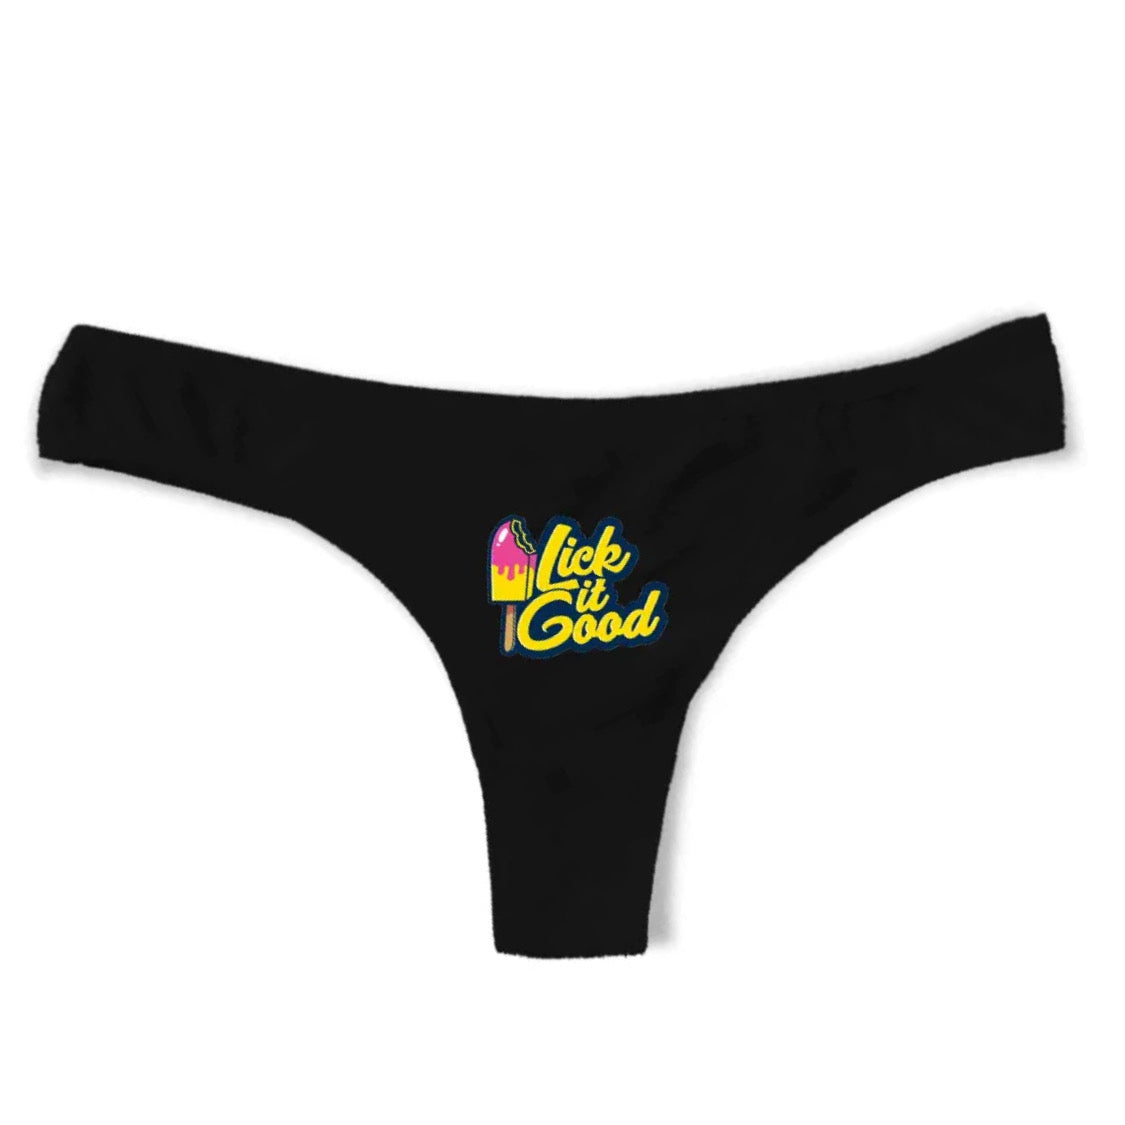 " lick it good" black panties